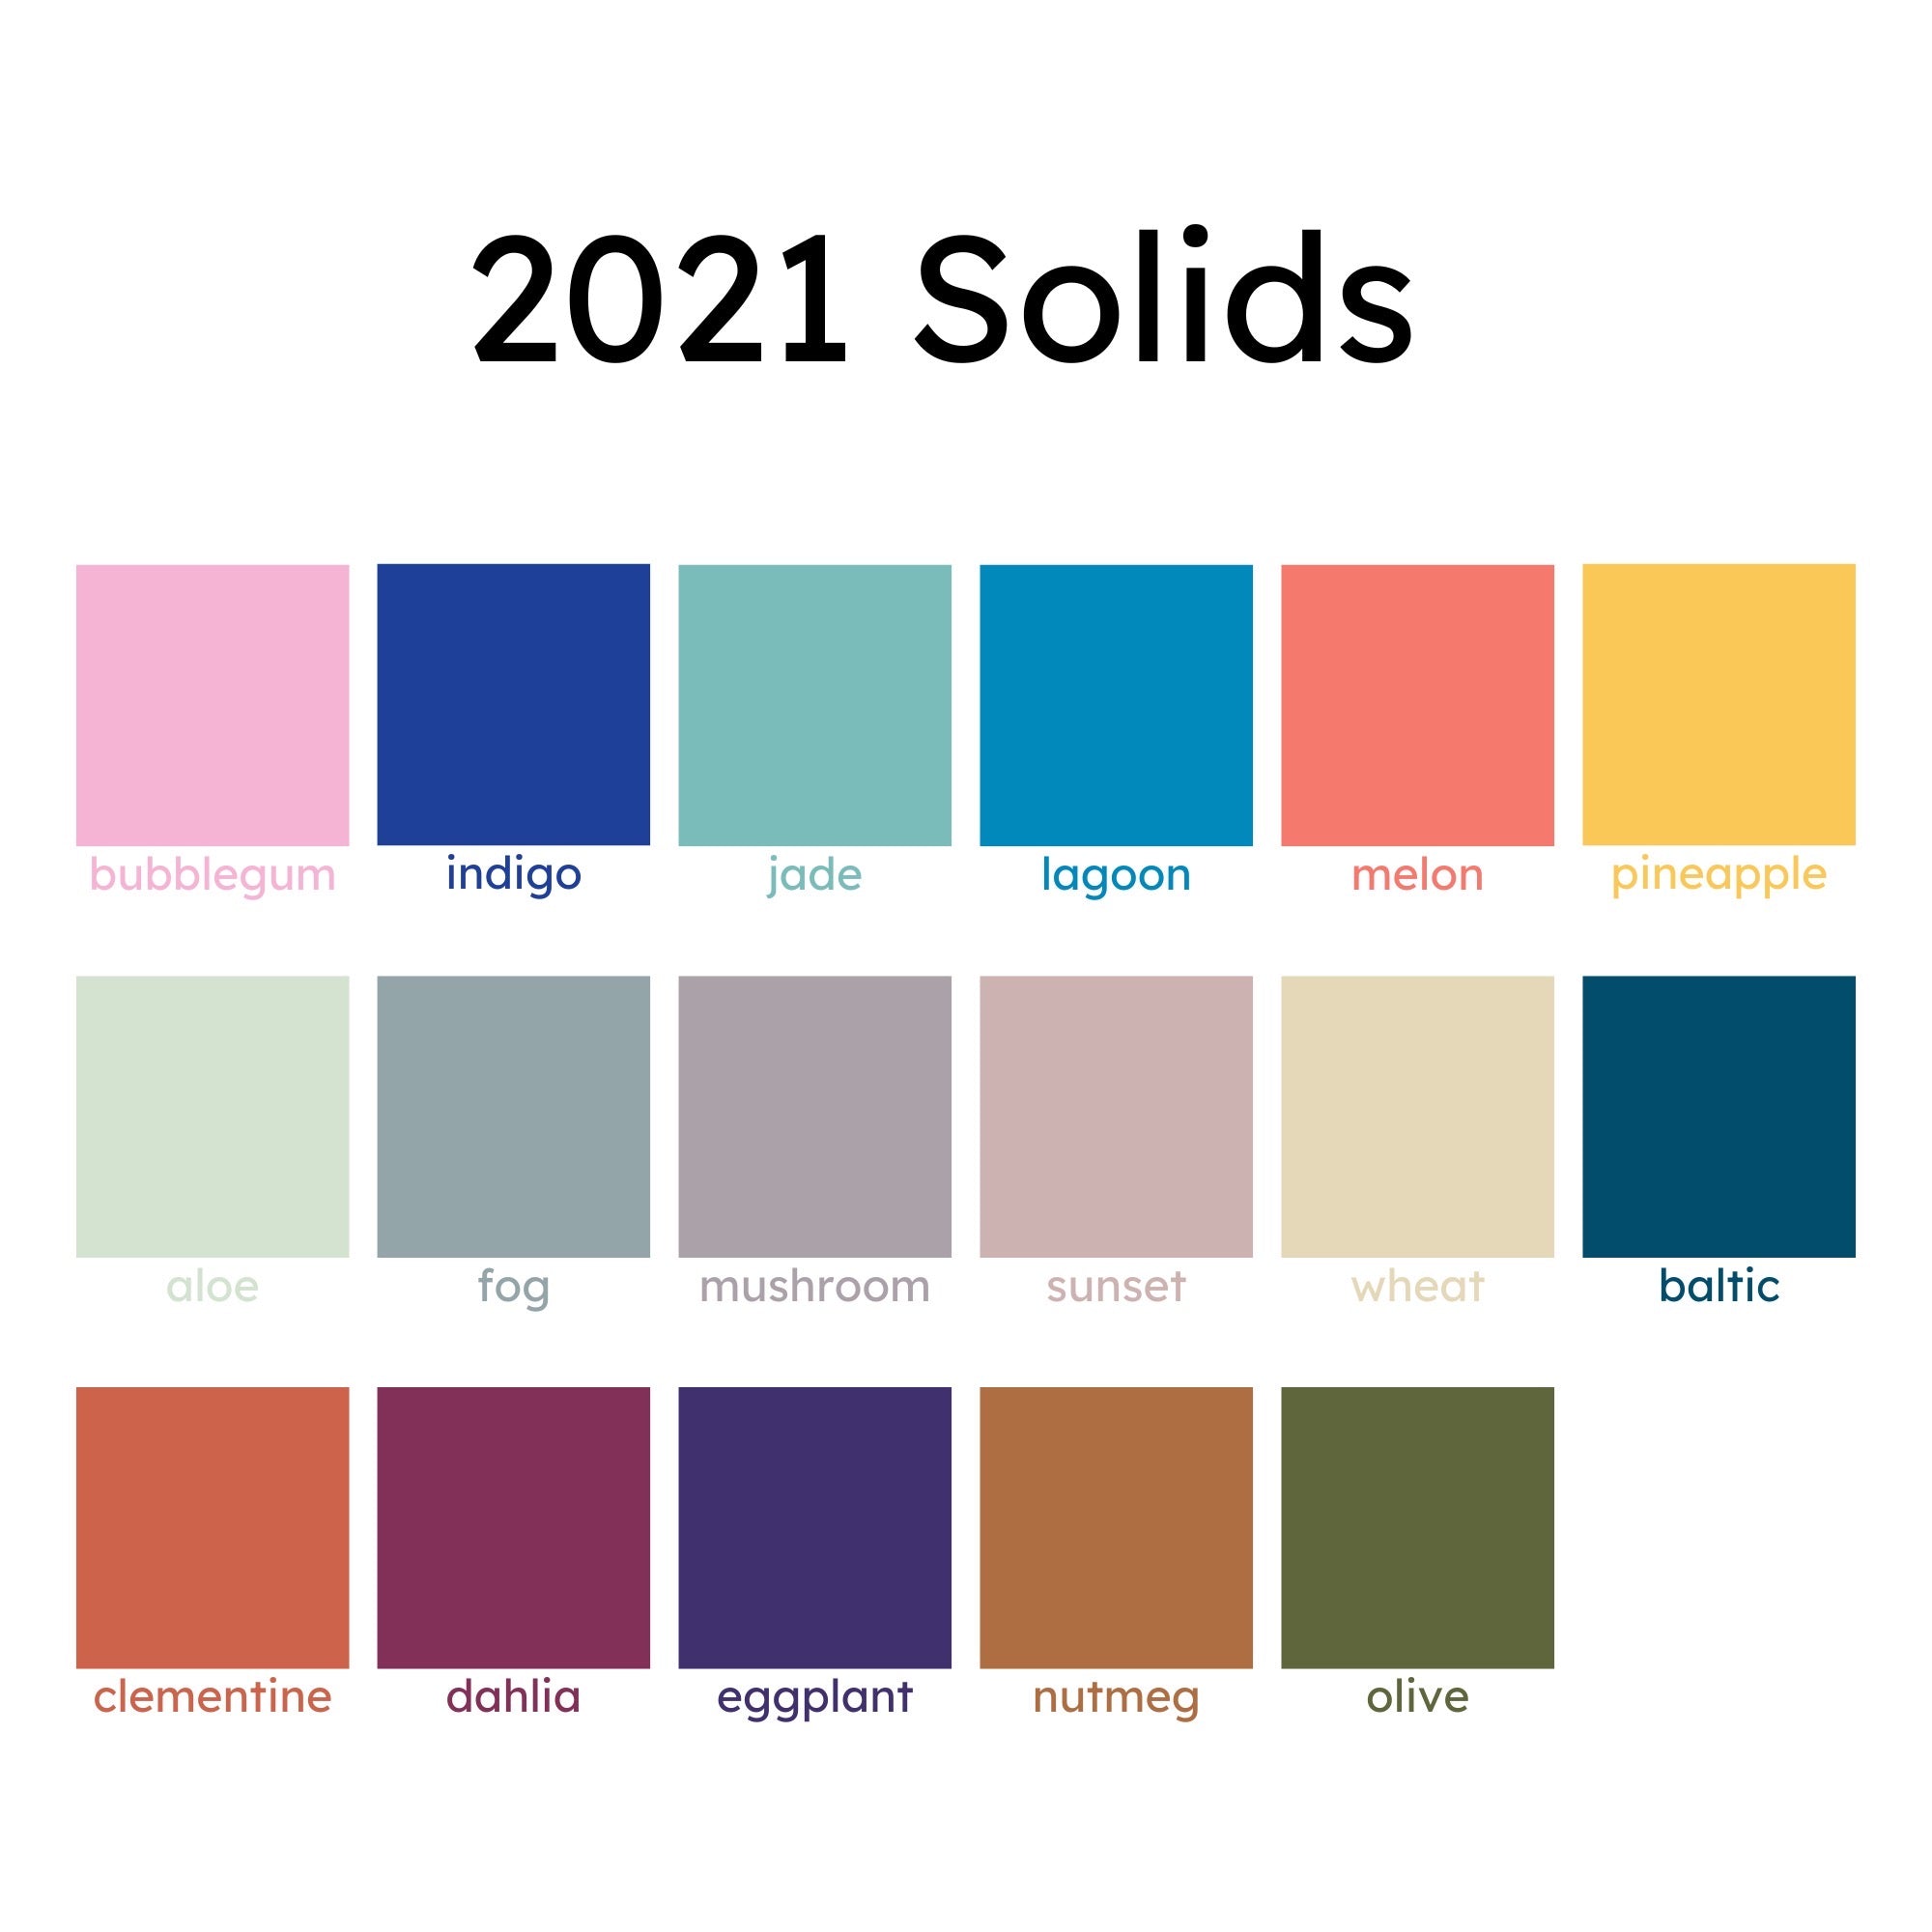 2021 solids